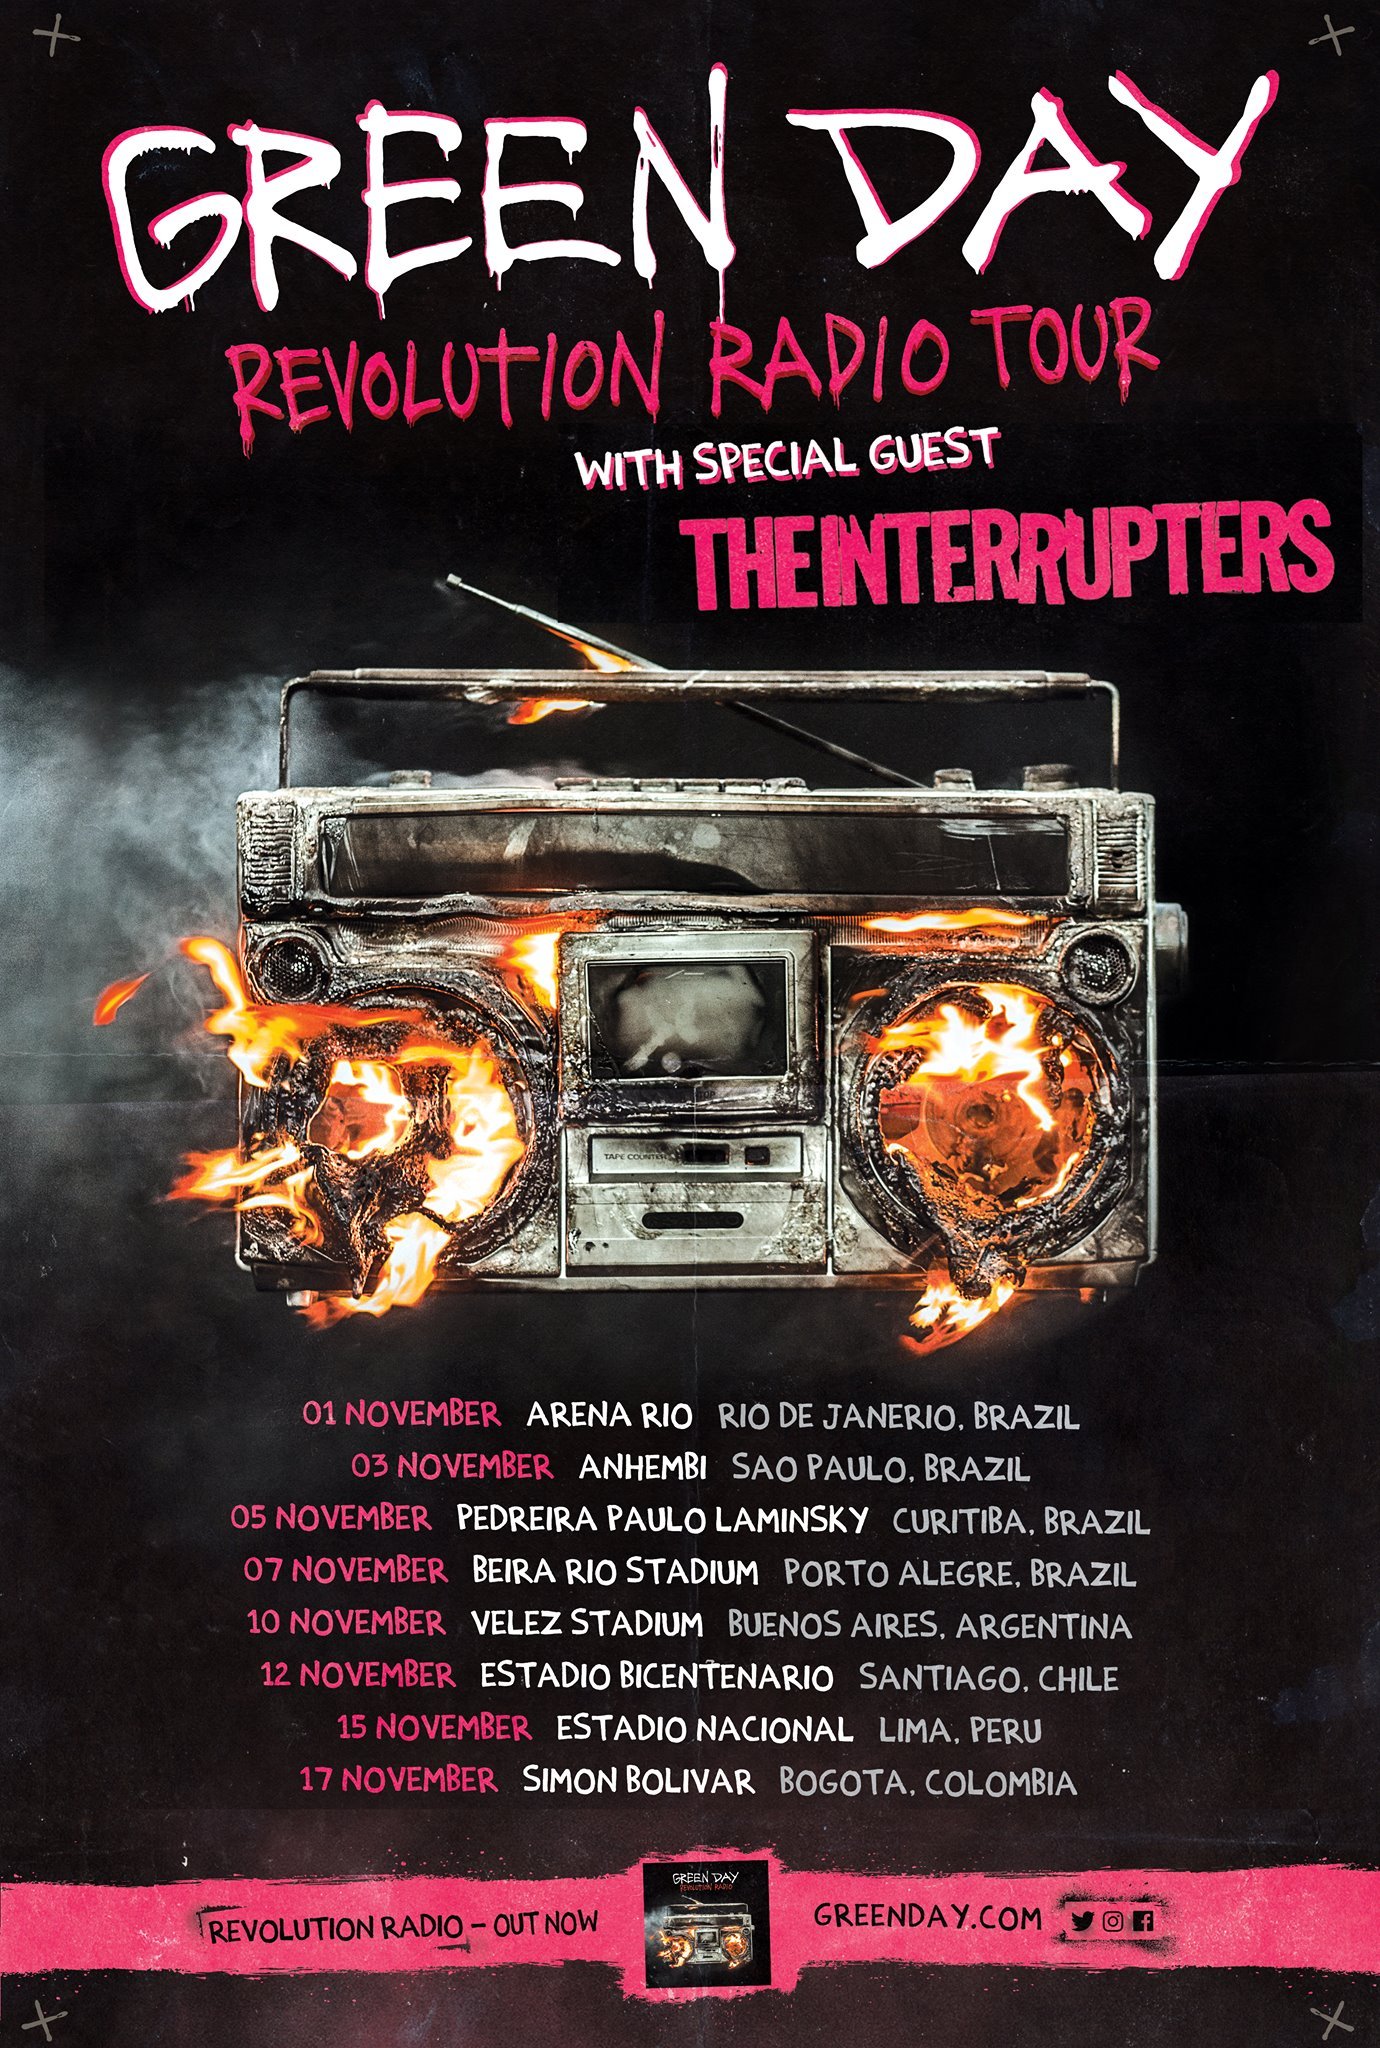 Green Day Revolution Radio Tour at Pedreira Paulo Leminski (Curitiba) on 5  Nov 2017 | Last.fm